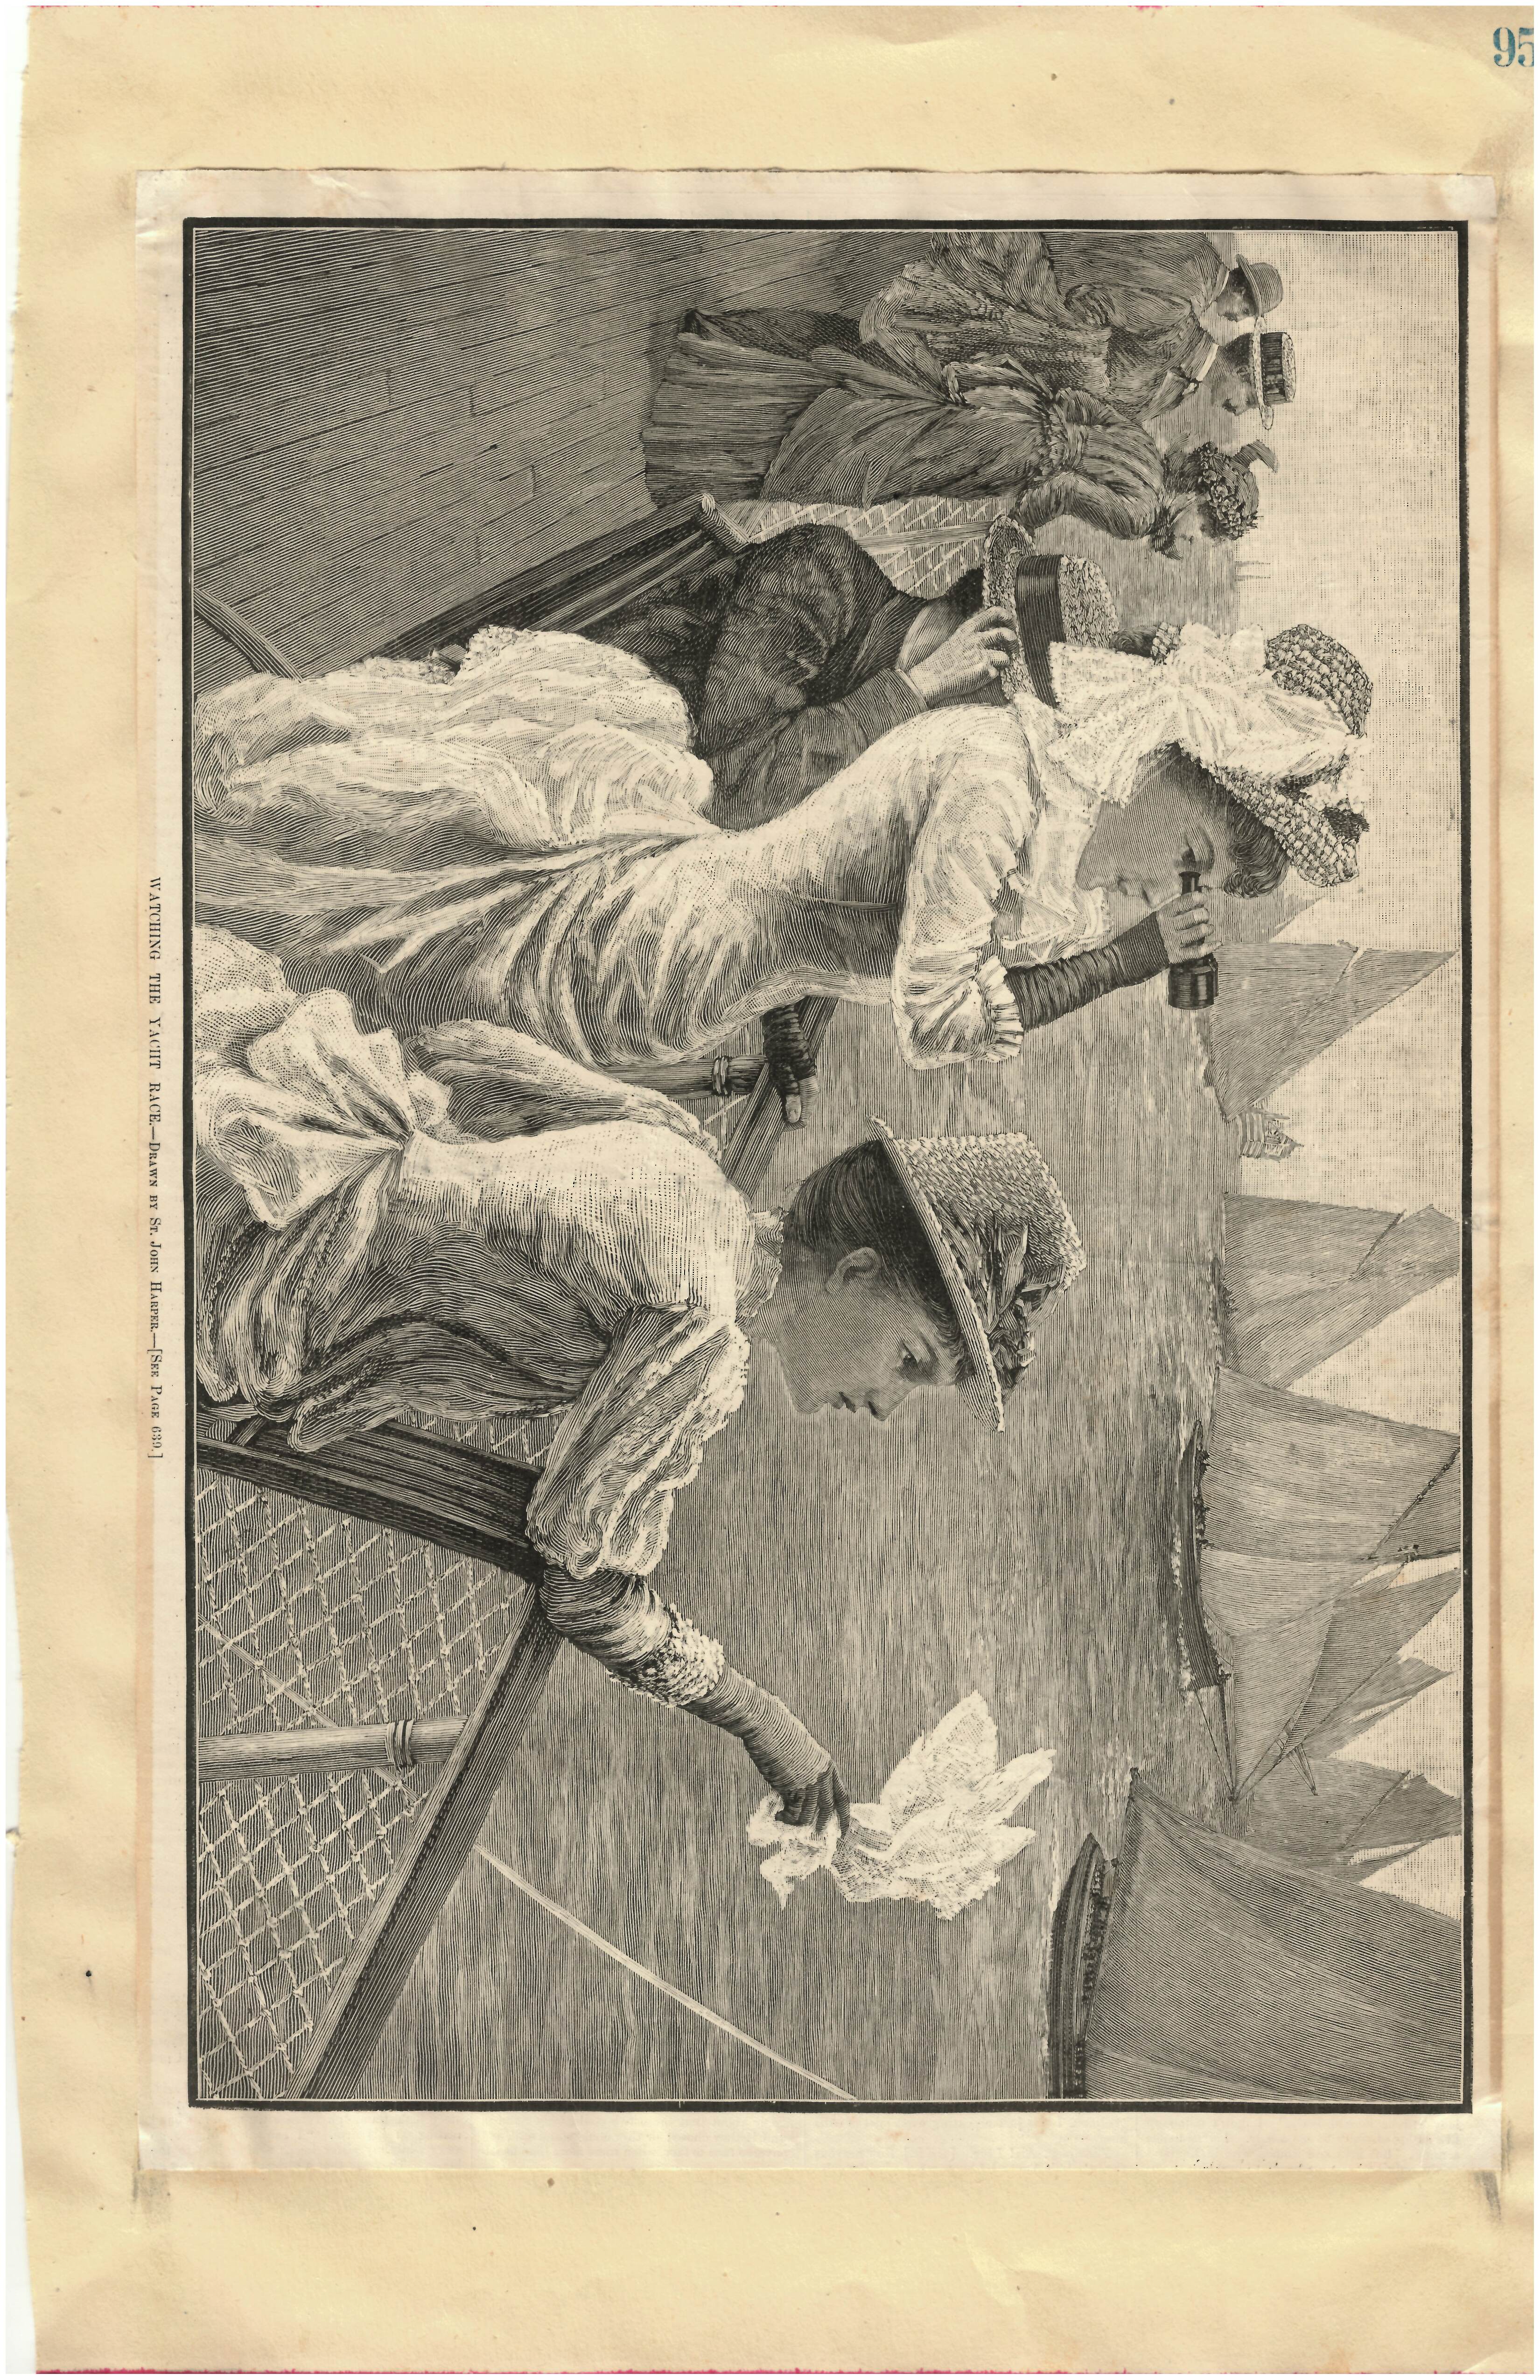 "Watching The Yacht Race" by St. John Harper Ad Print/ "The Secret" Ad Print